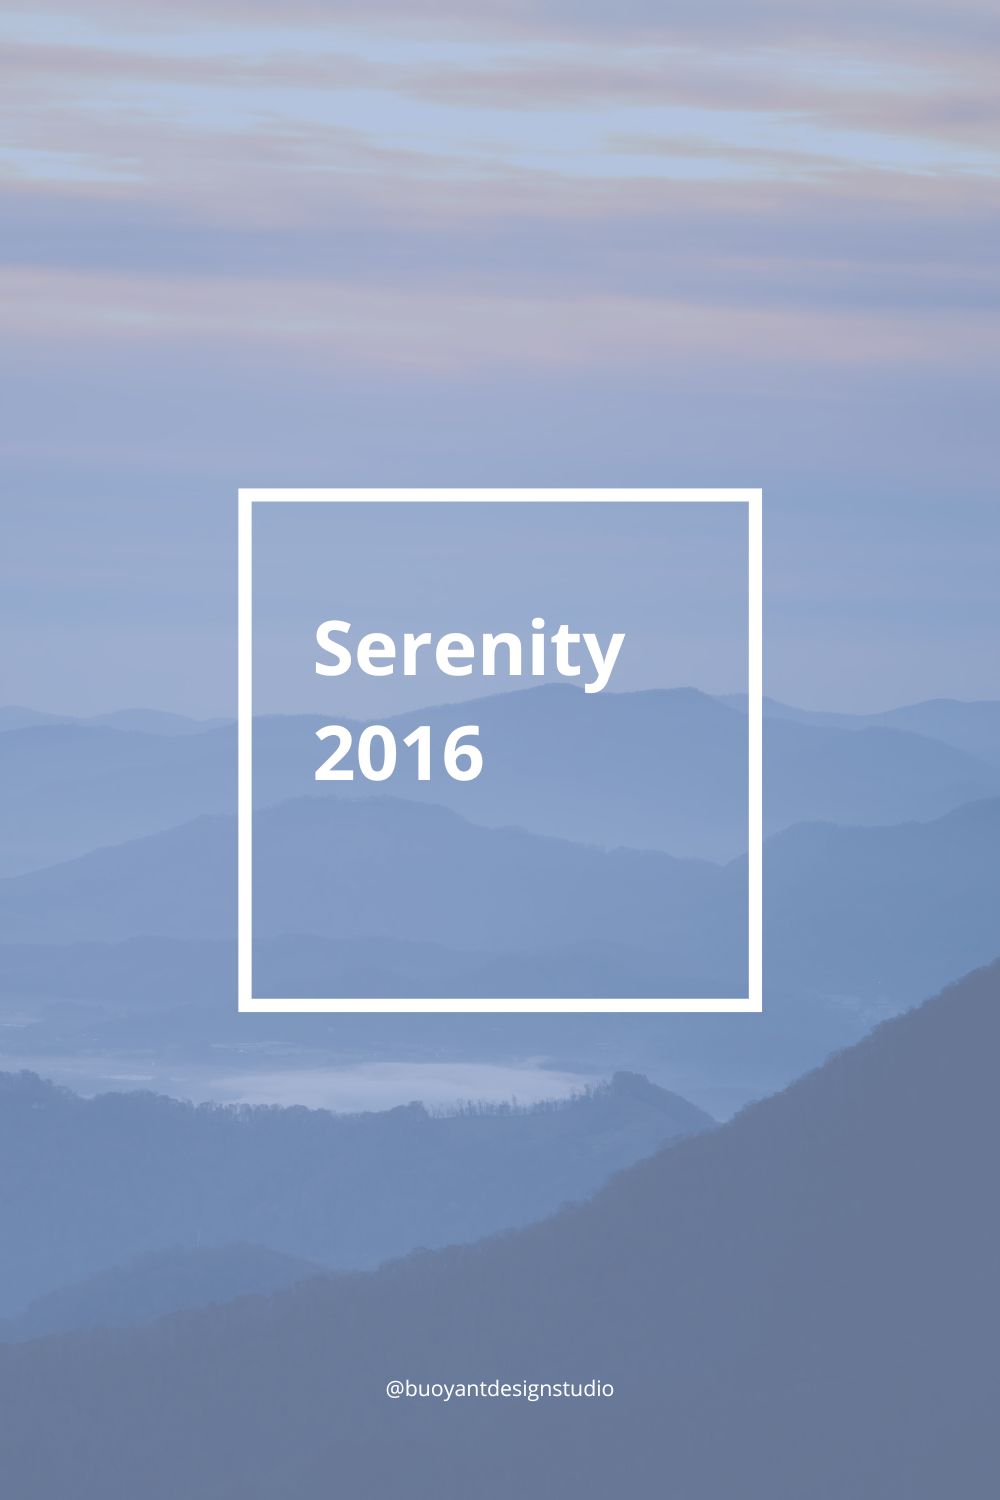 Serenity 2016